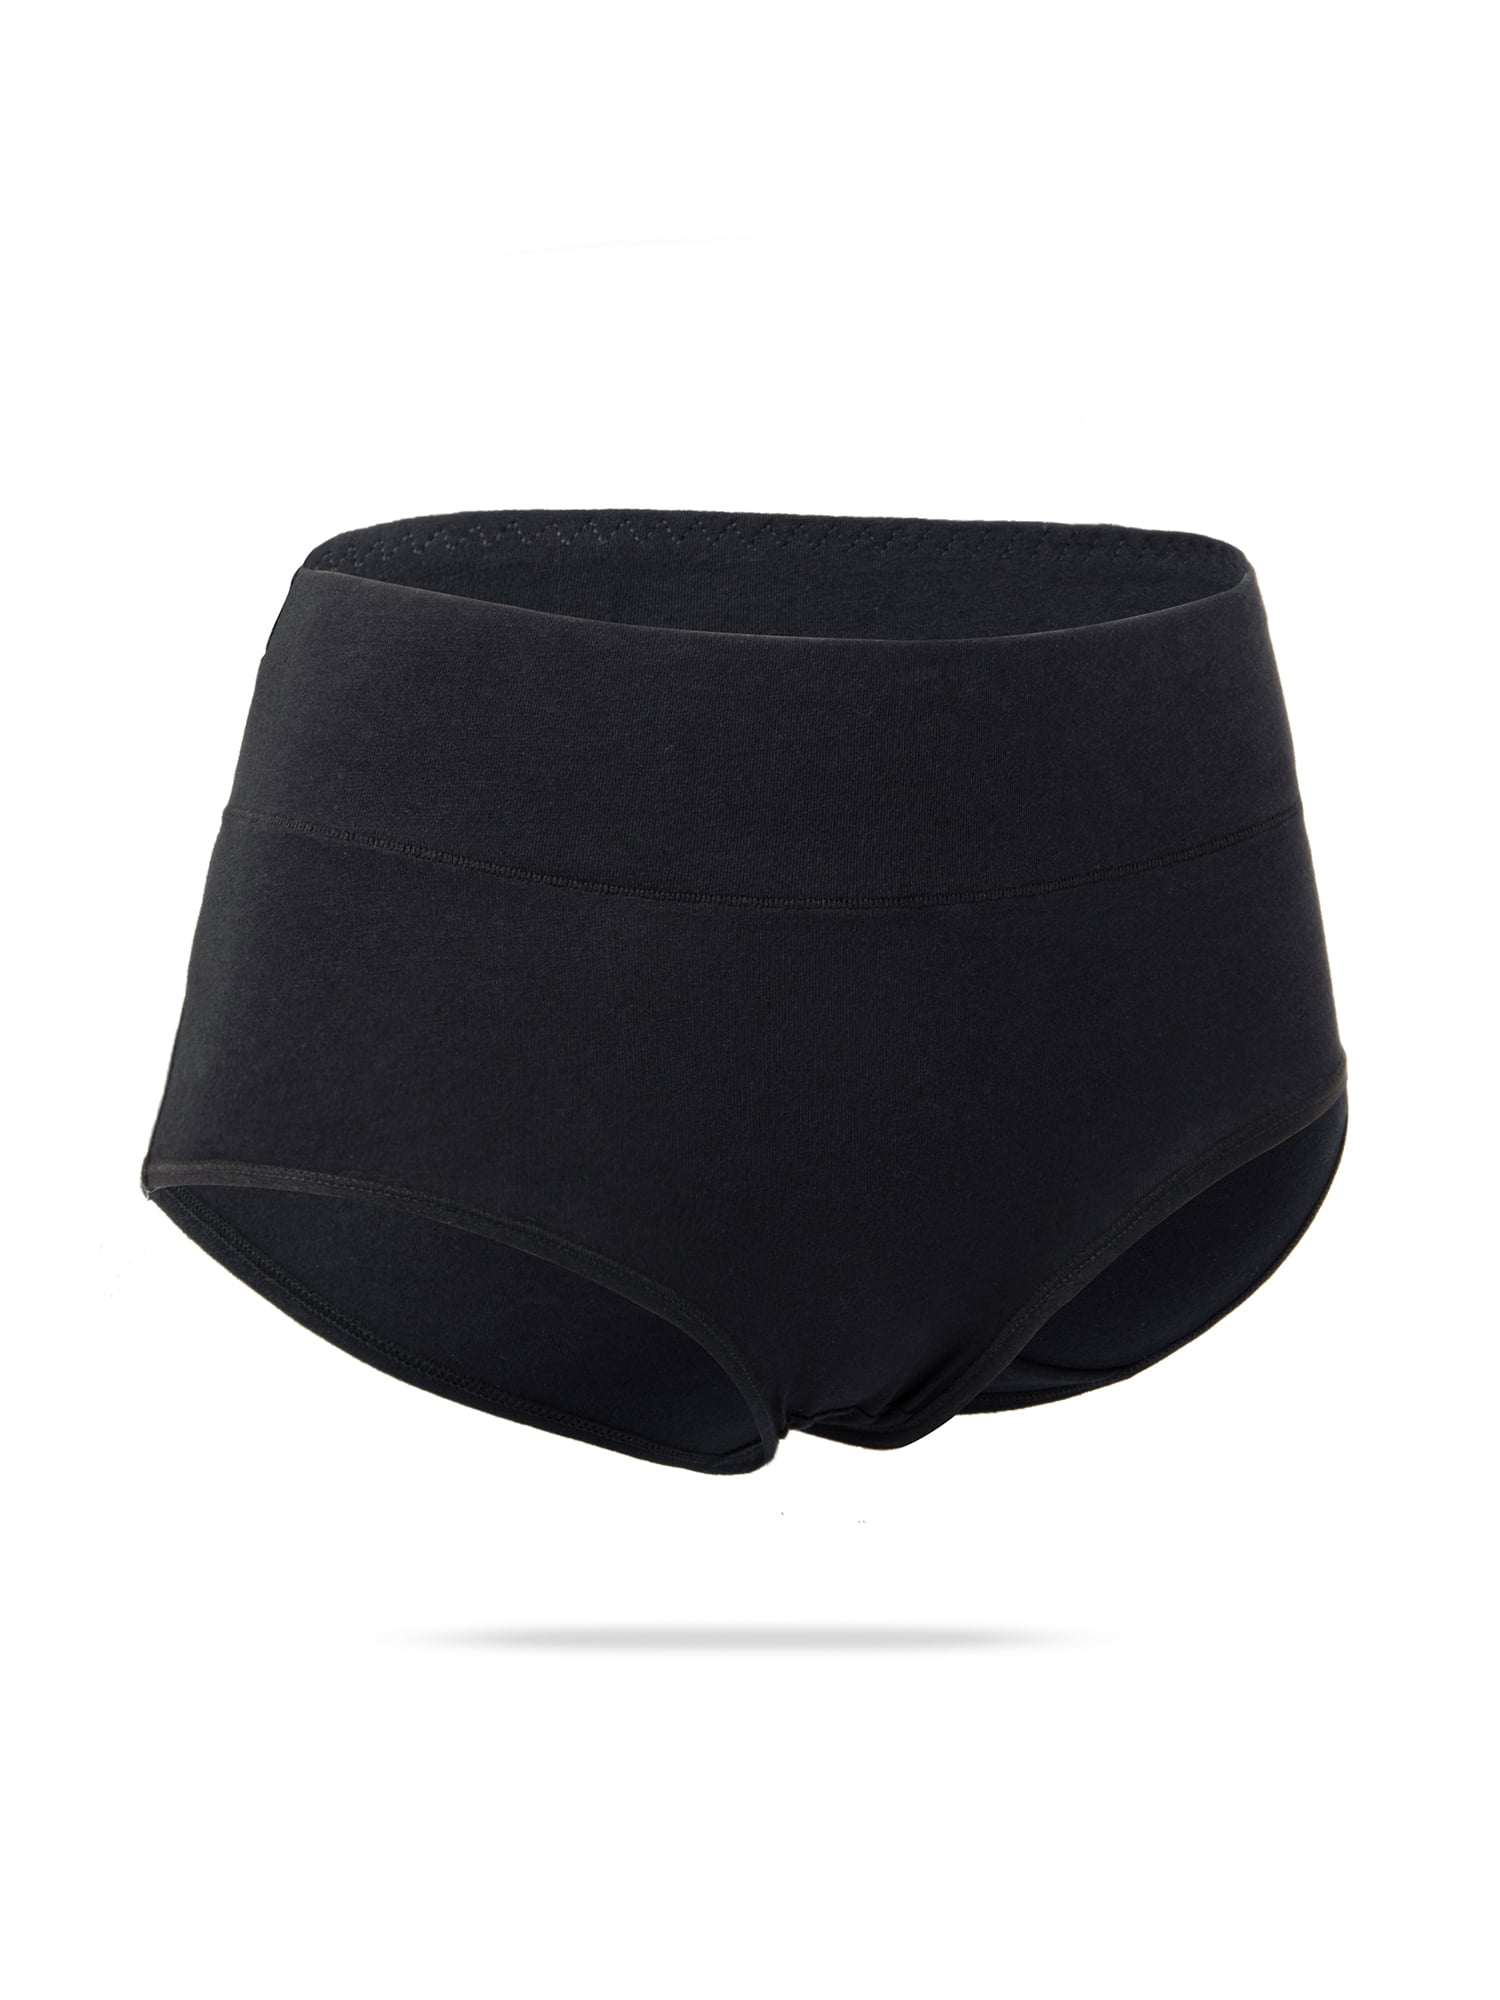 SAYFUT Women's Cotton Brief Panties,Seamless Underwear Invisible No Show  Bikini Panties Brief Multipack/Black/Gray